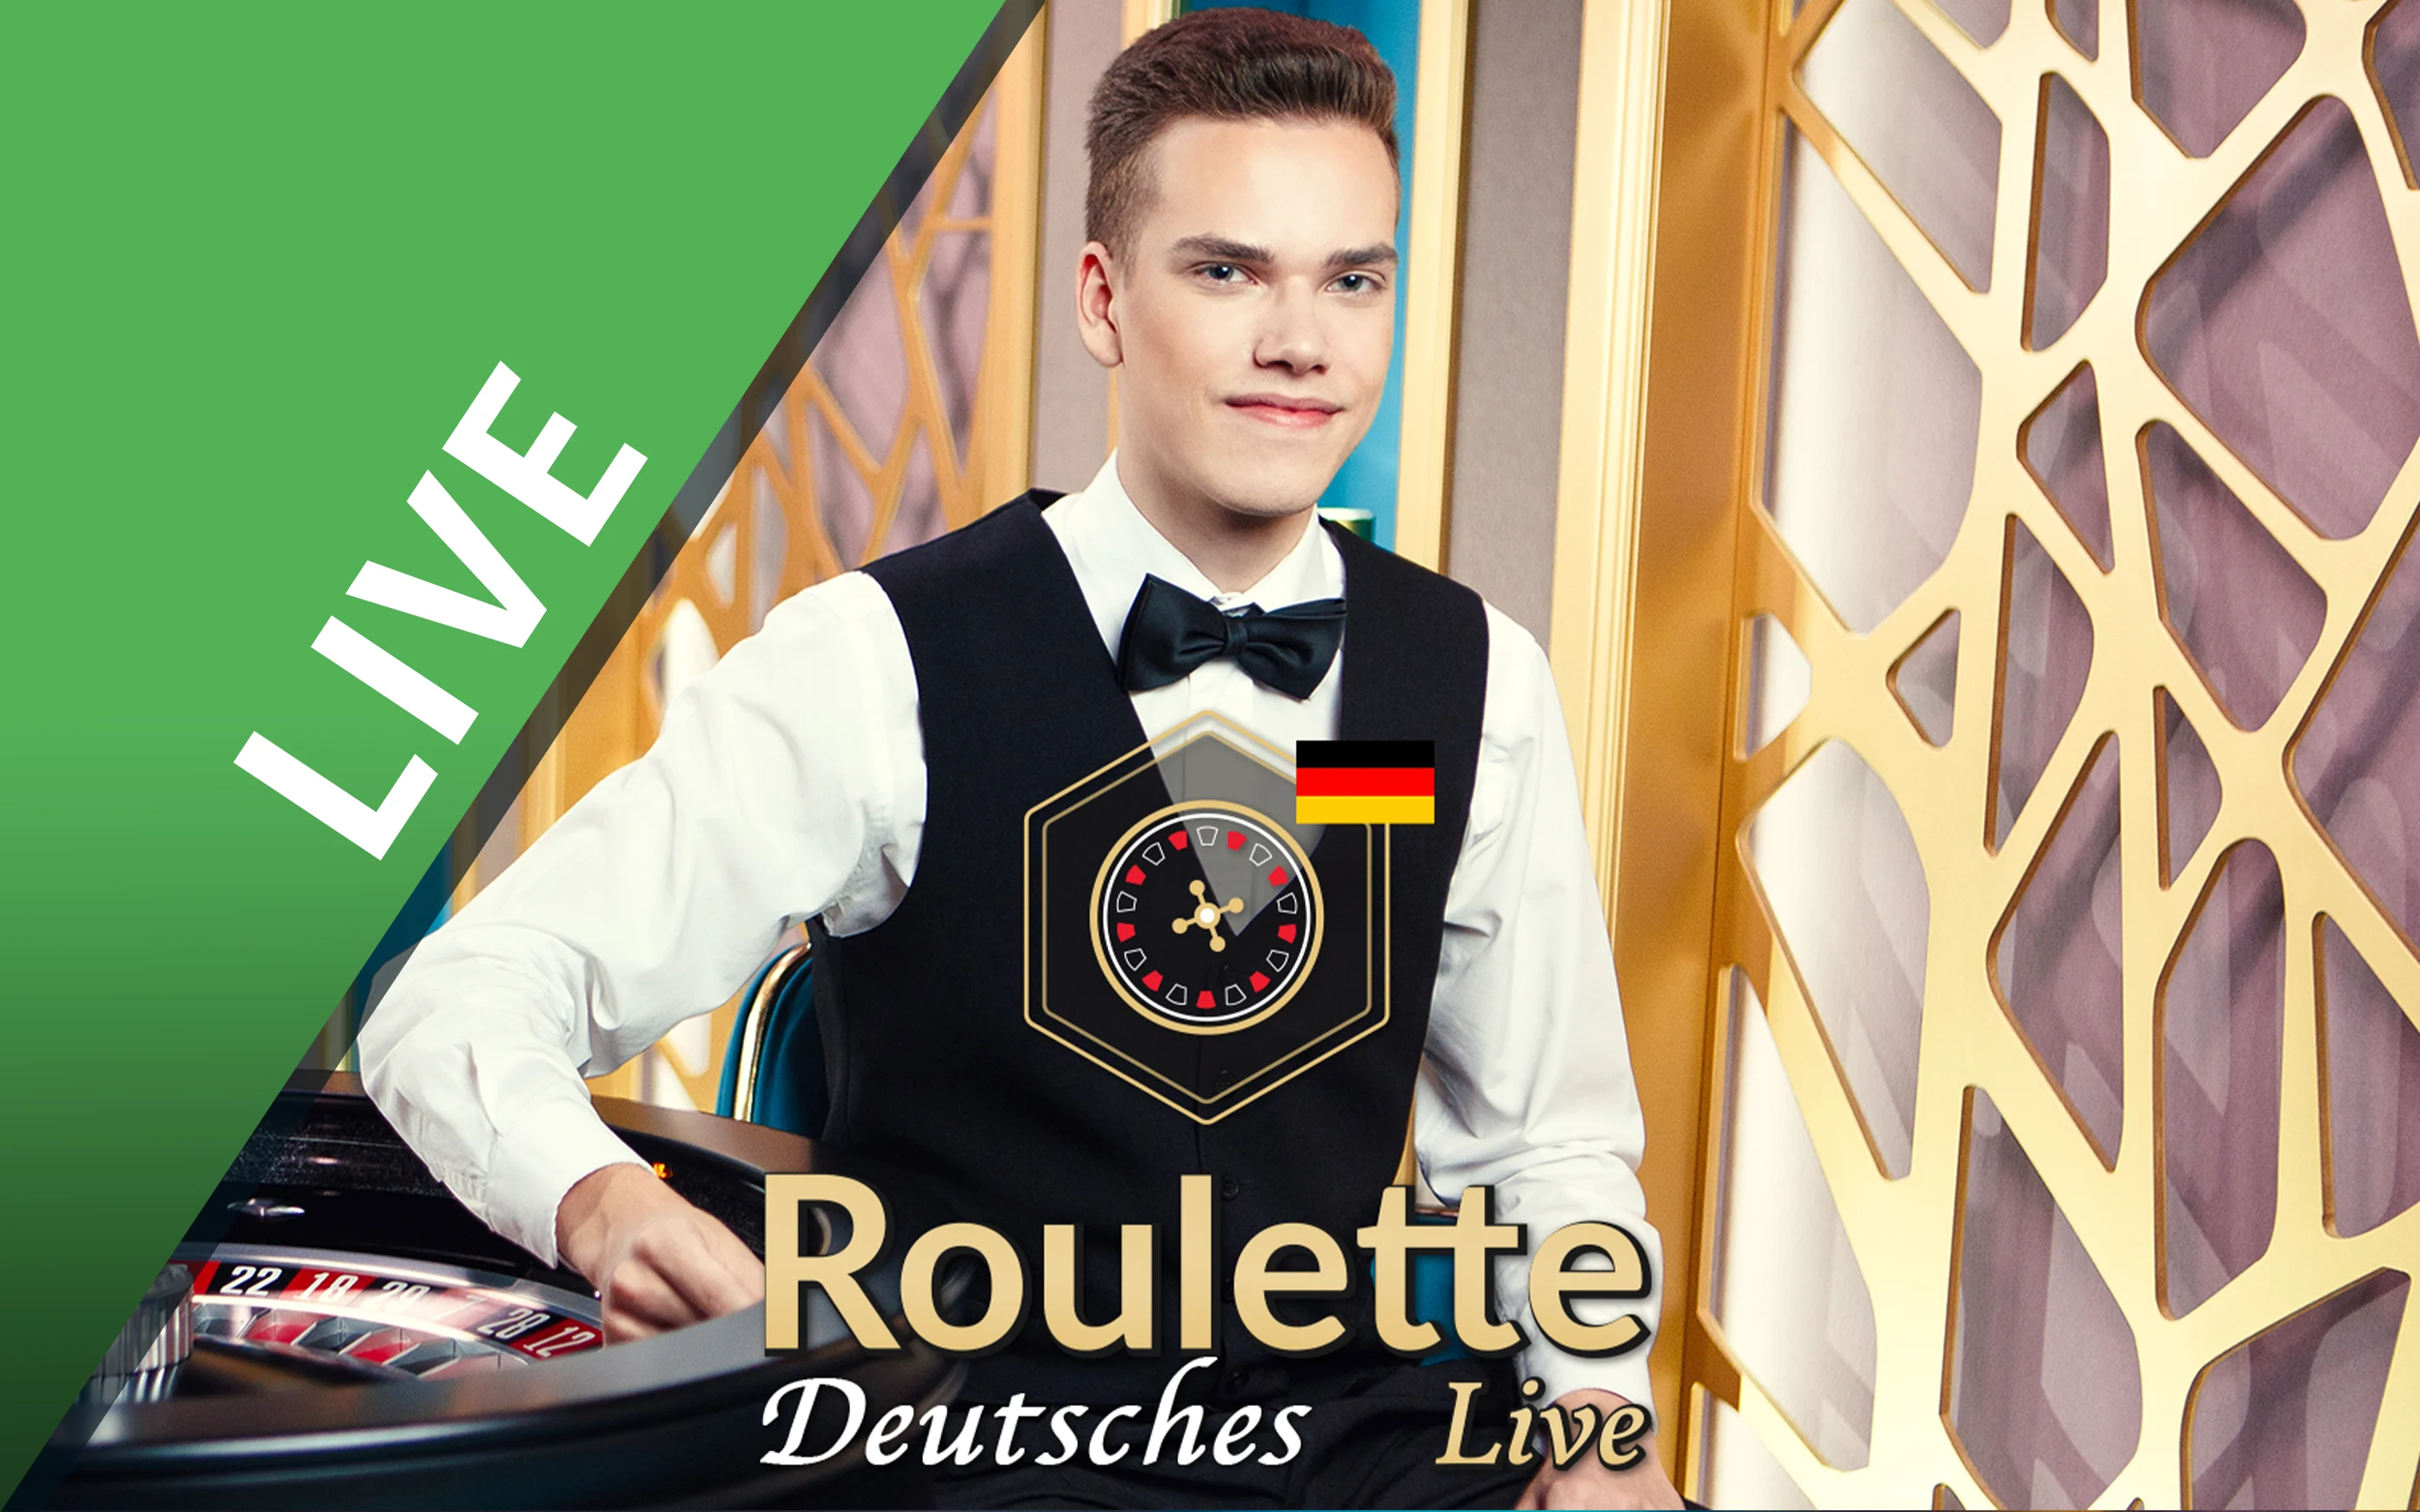 Play Deutsches Roulette on Starcasino.be online casino